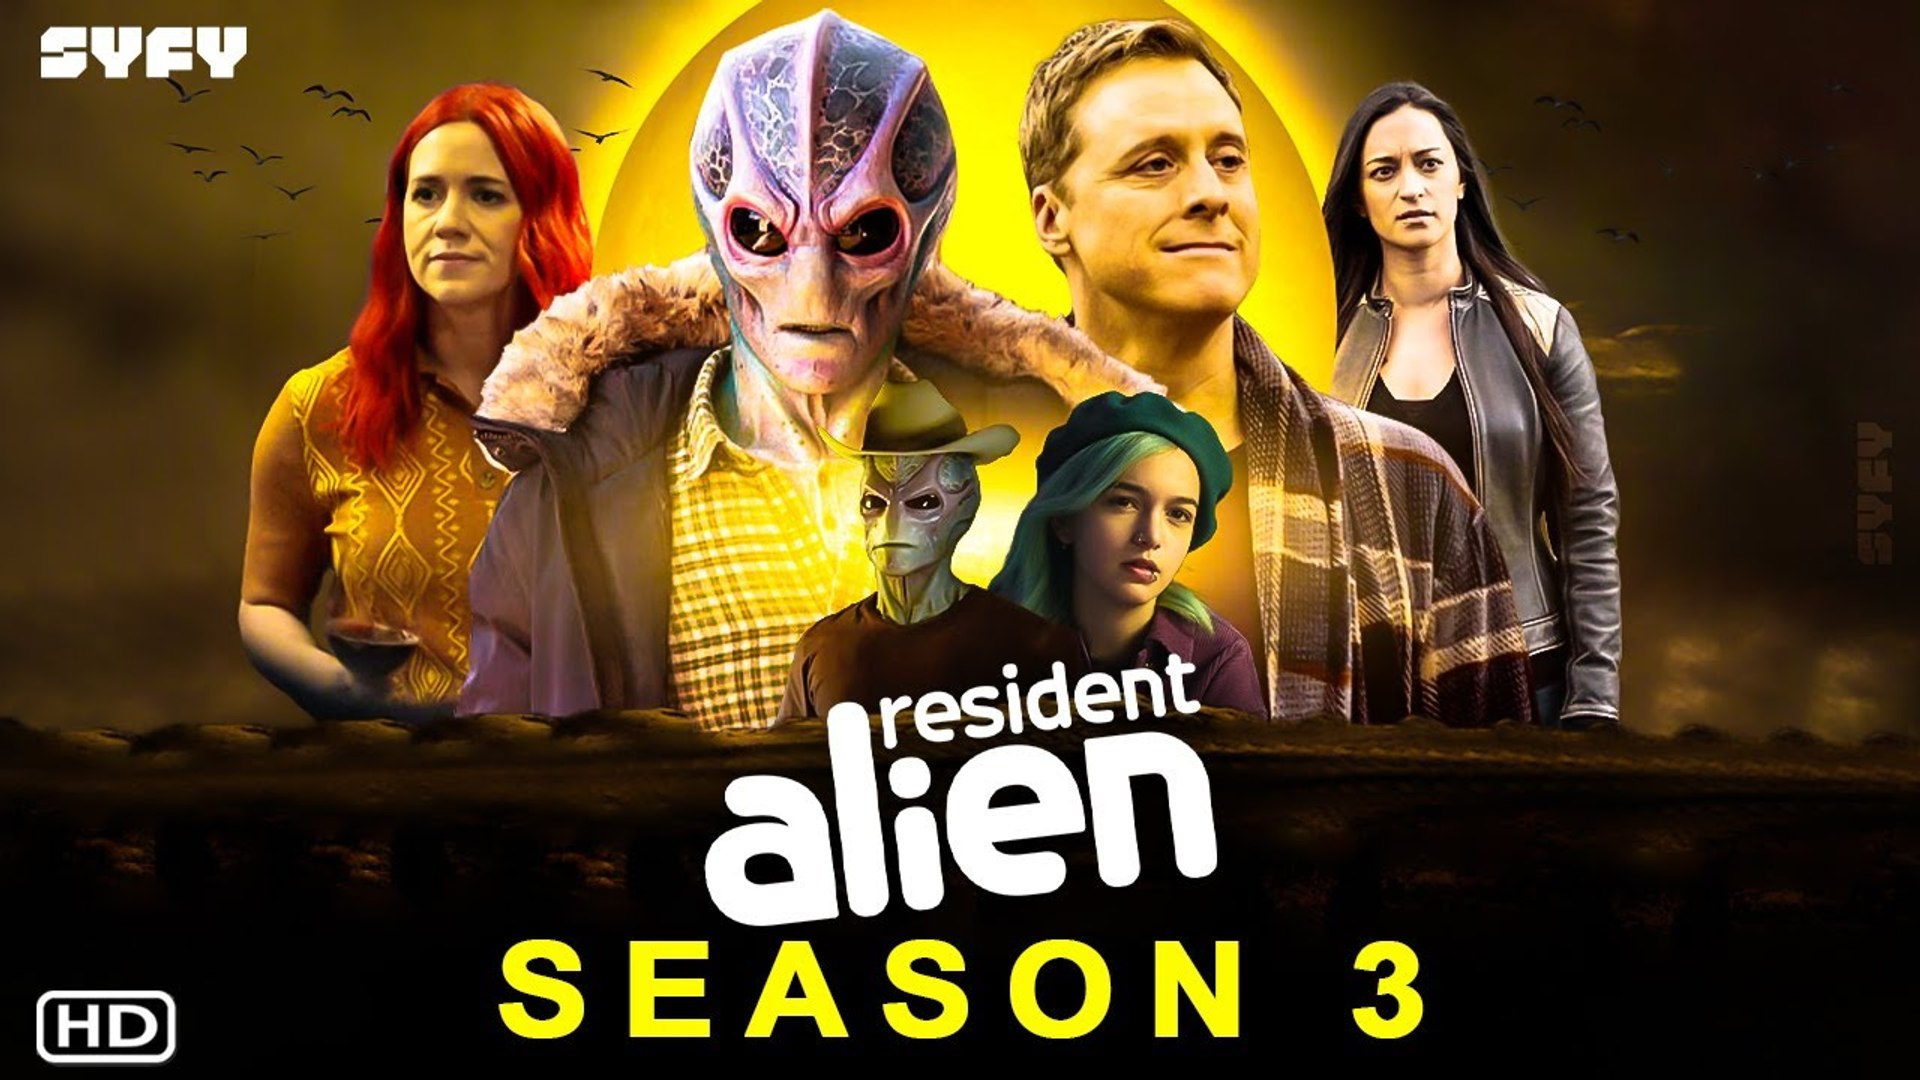 Resident Alien Season 3 Trailer - SYFY, Release Date, Episode 1, Ending,  Review - video Dailymotion